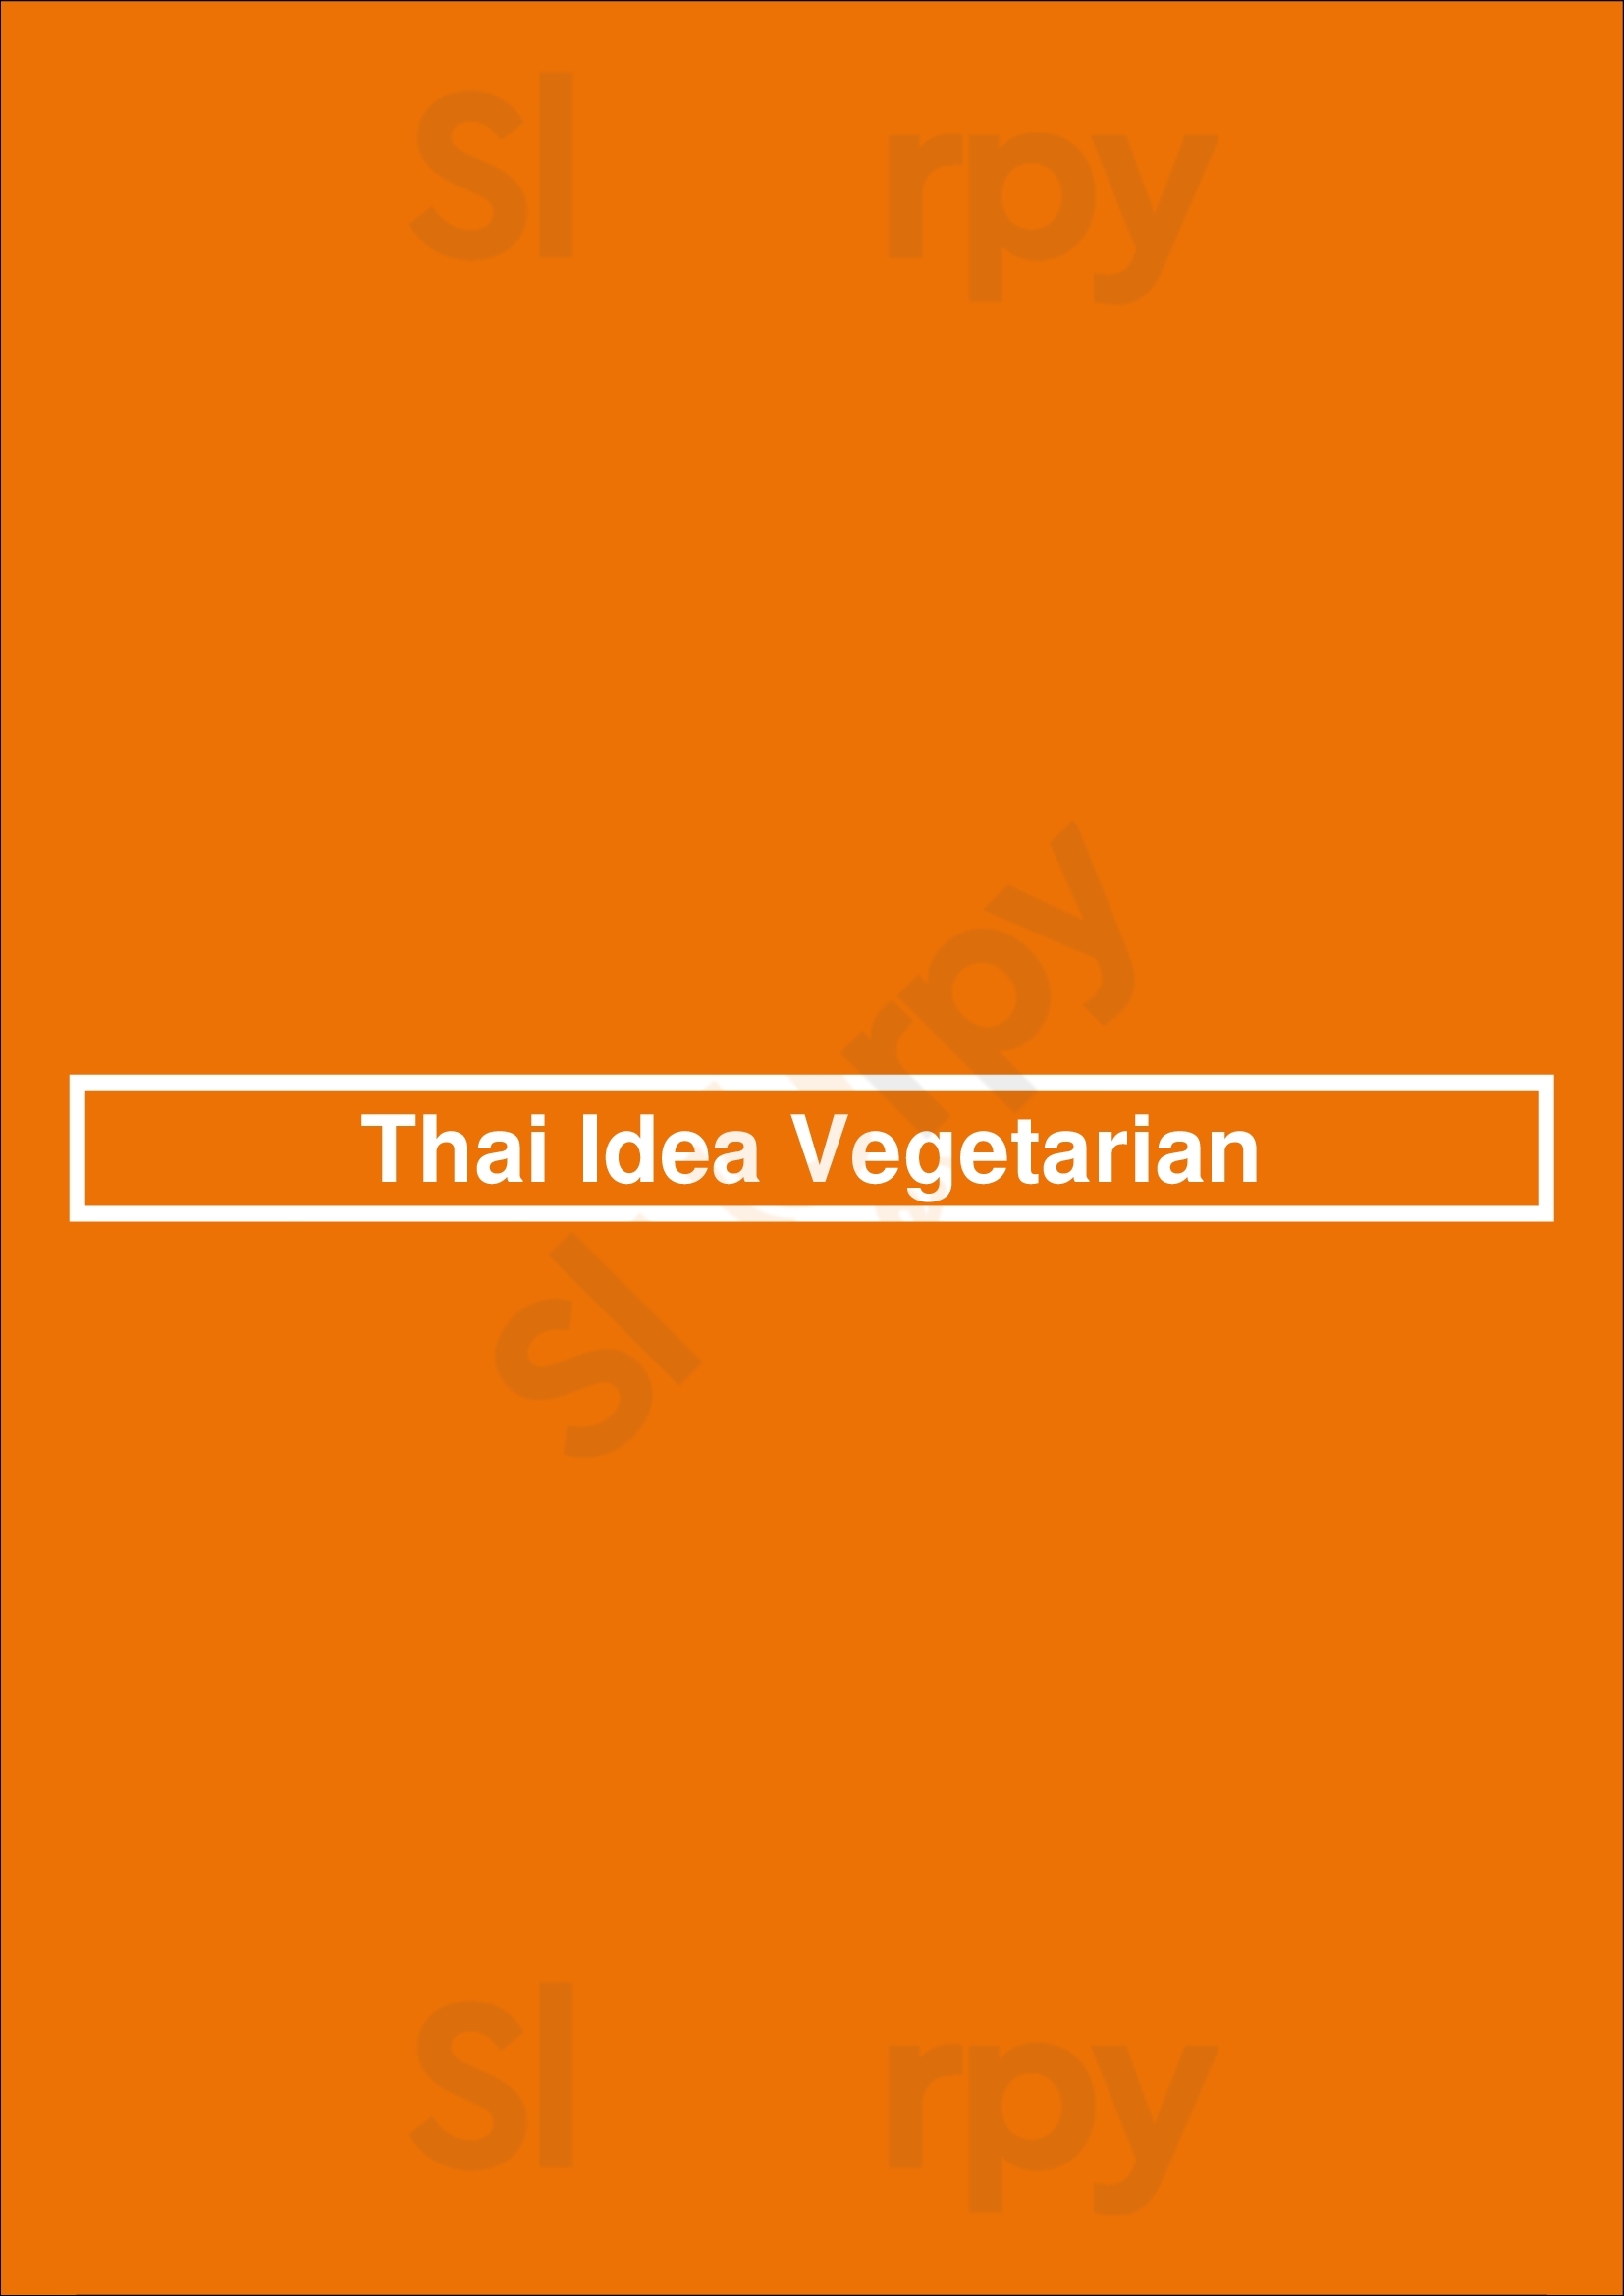 Thai Idea Vegetarian San Francisco Menu - 1